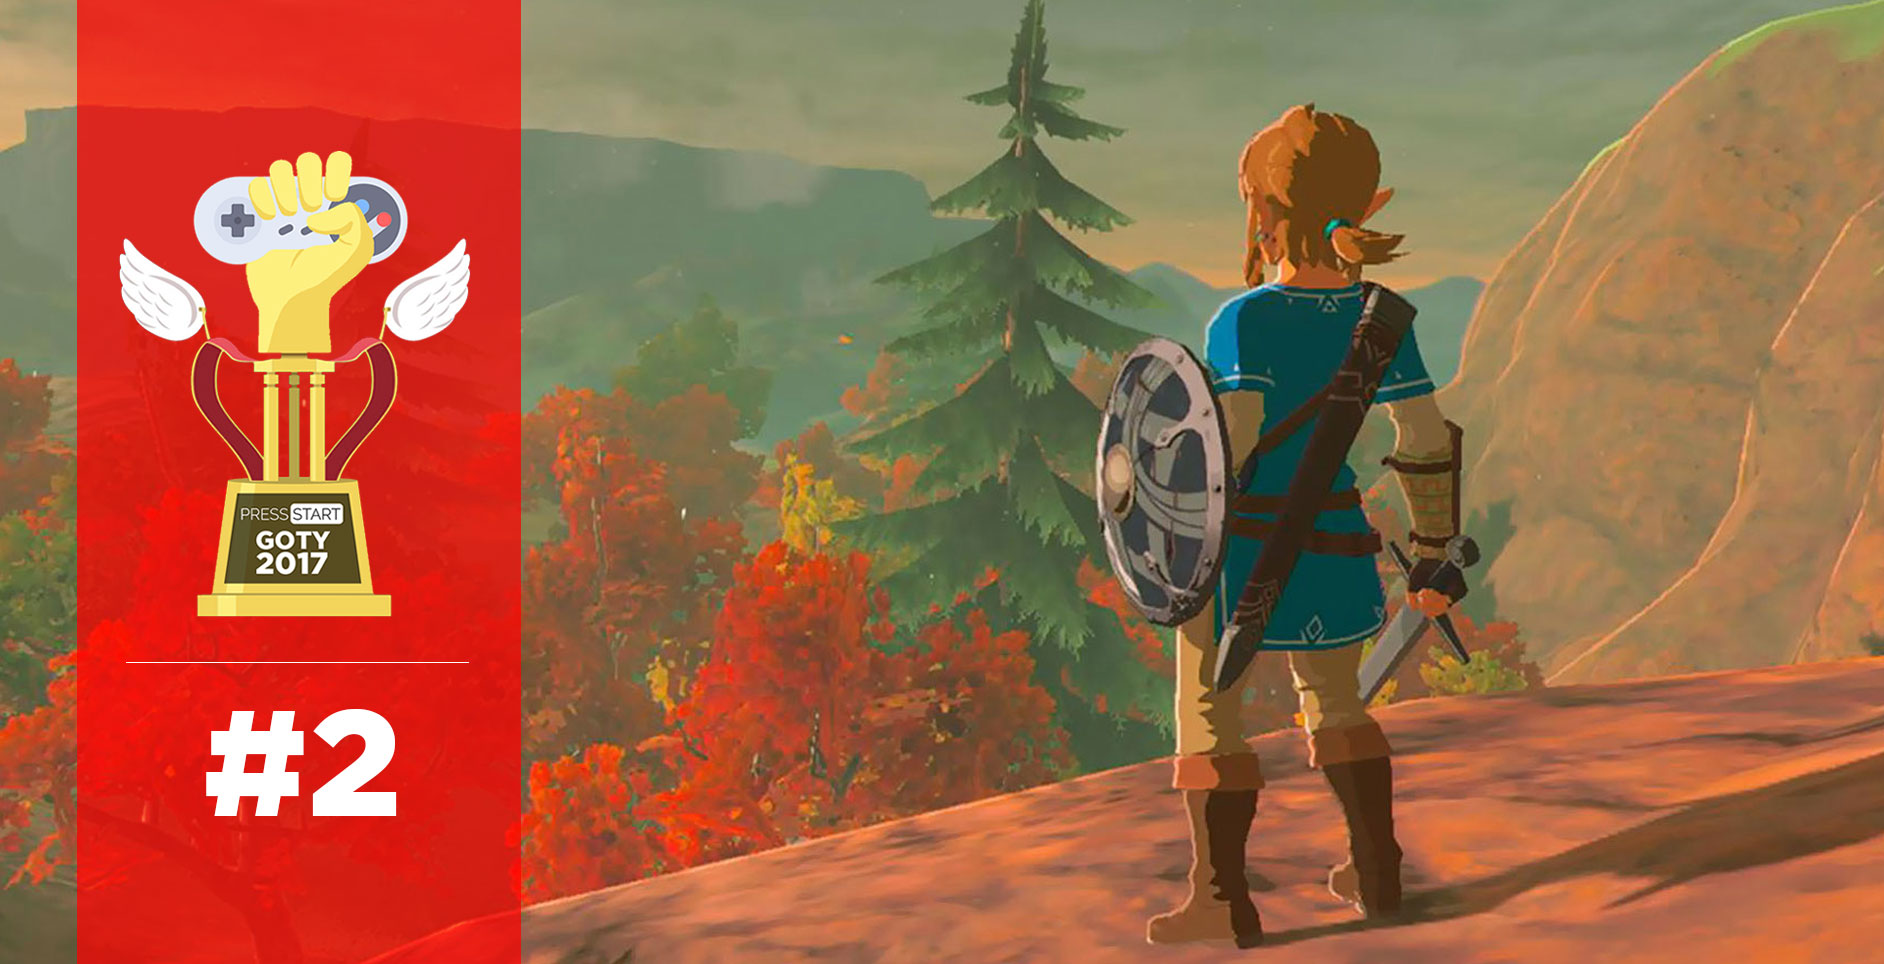 Stevivor's GOTY 2017: The Legend of Zelda: Breath of the Wild